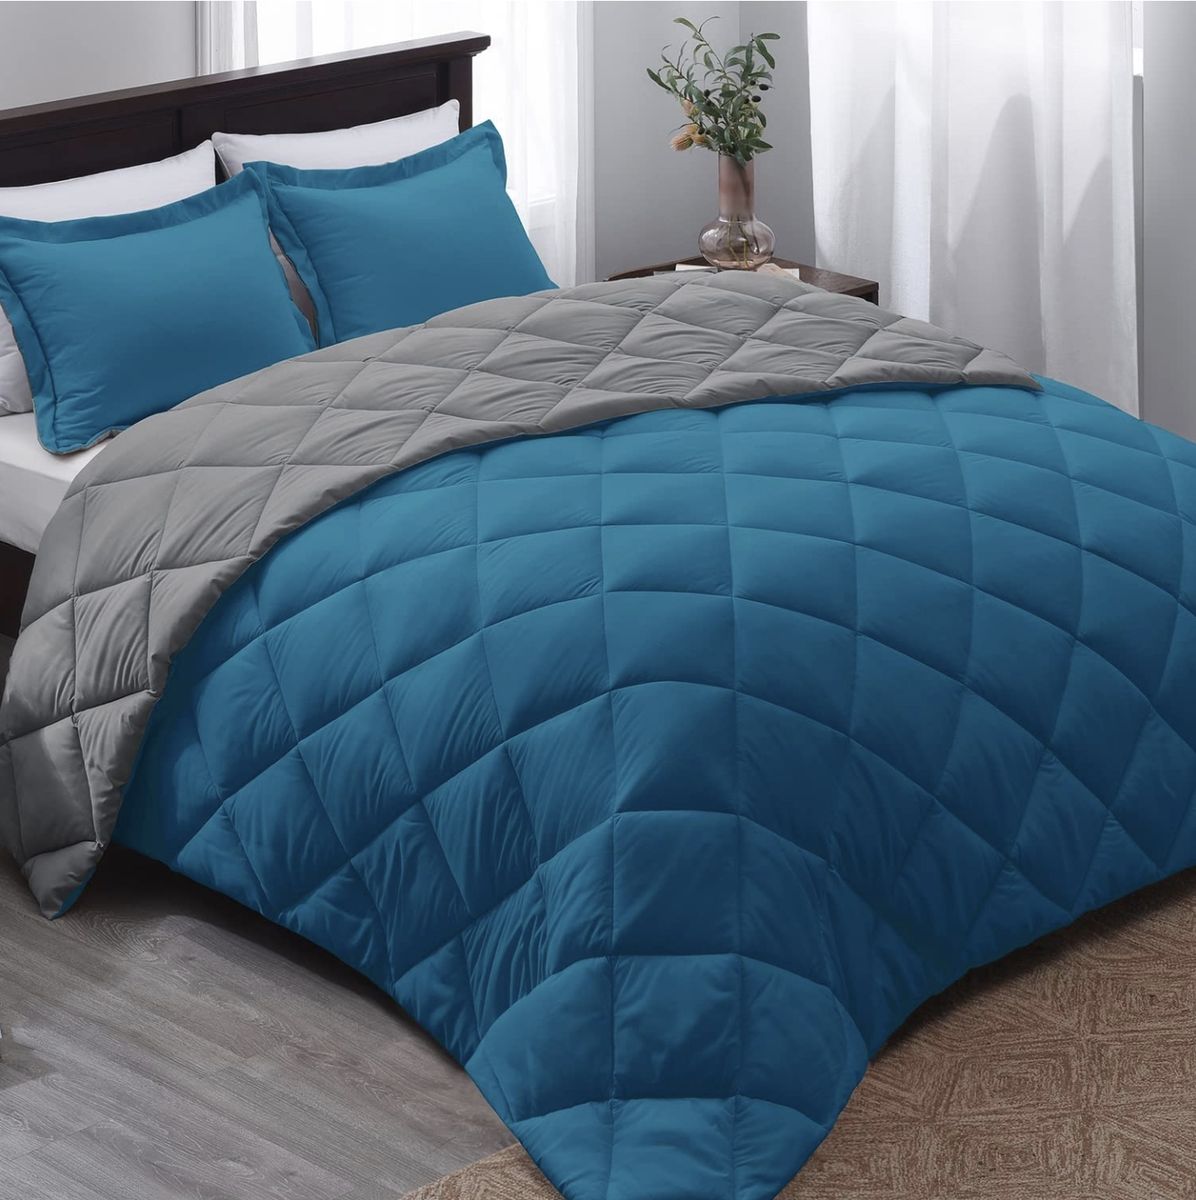 Reversible Comforter Set 5 Piece Black/Light Grey Lightweight Bedspread, Shop Today. Get it Tomorrow!